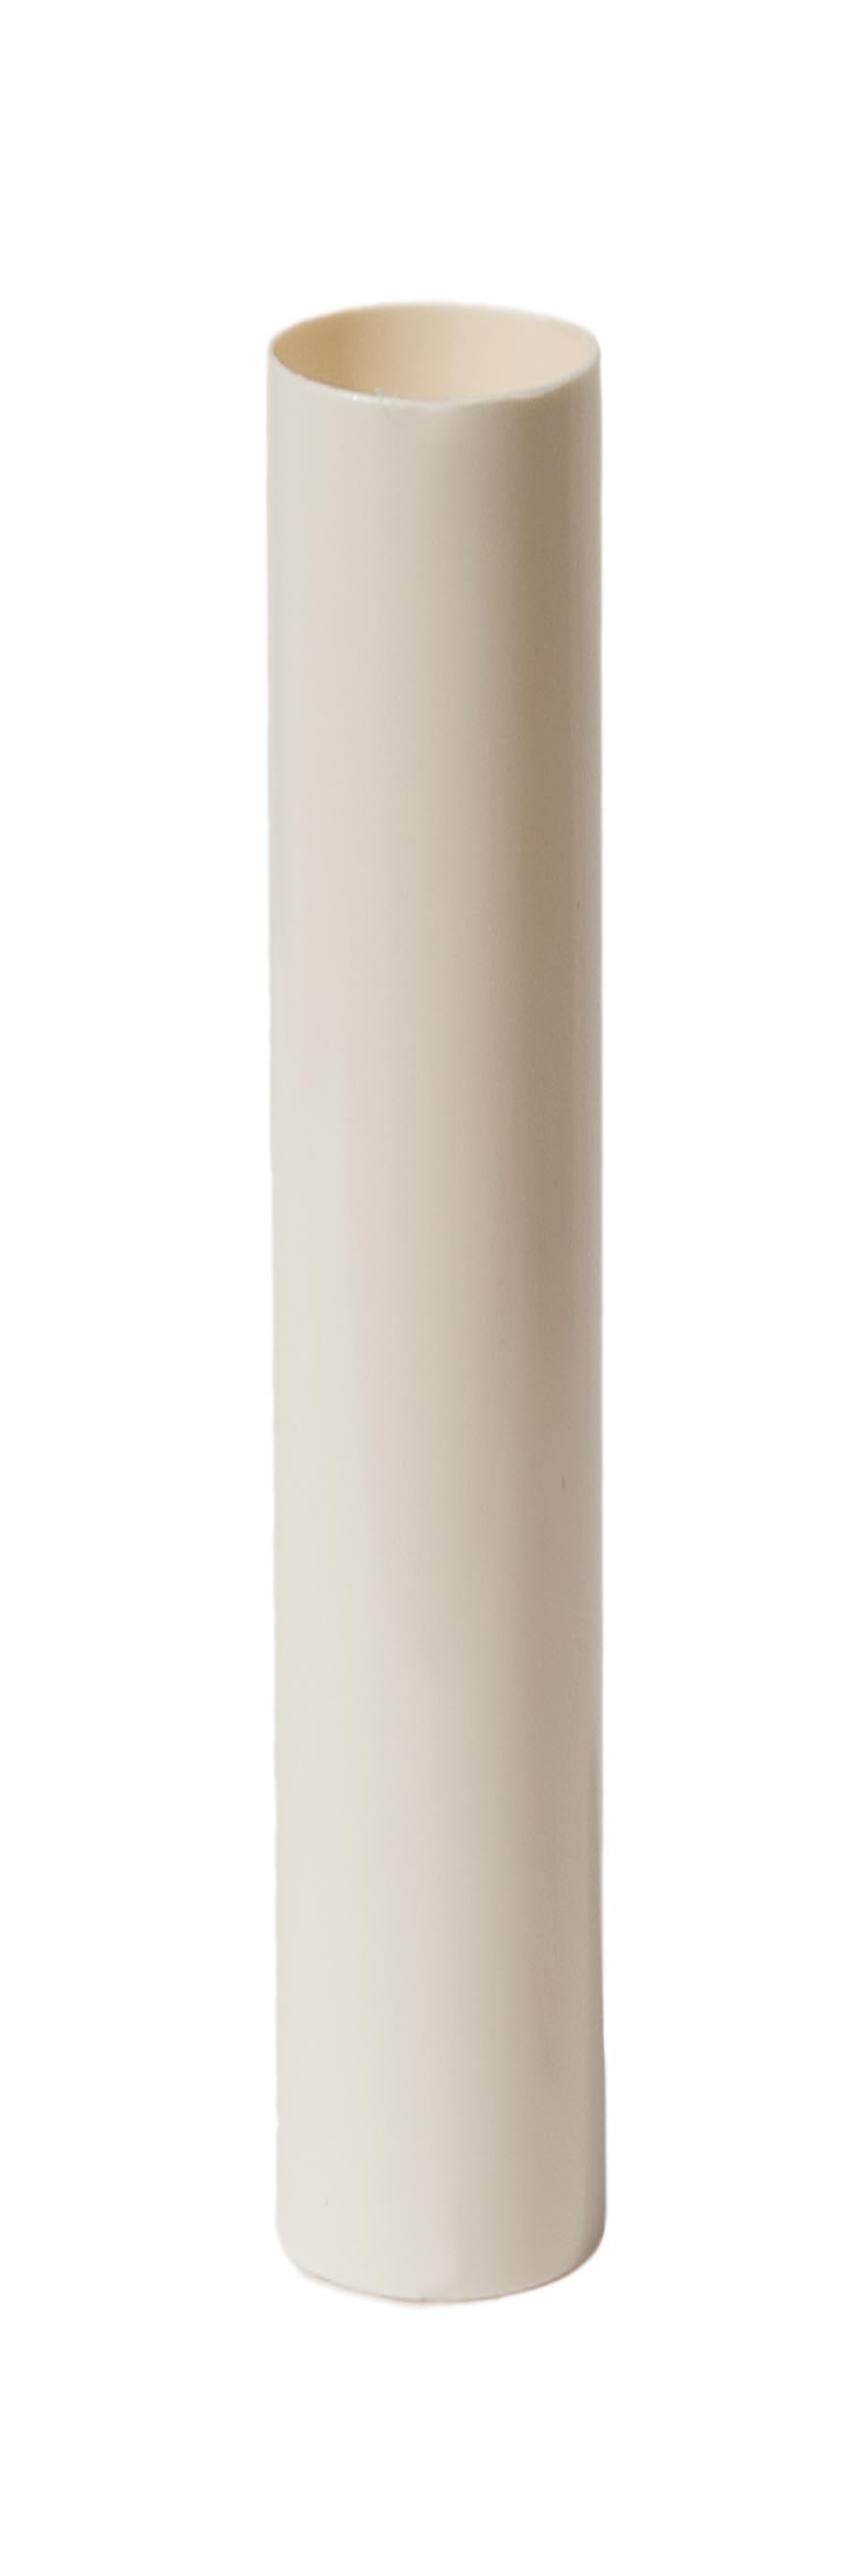 Cream Colored Plastic MEDIUM Base Candle Cover, Choice 3", 4", 6", or 8" 